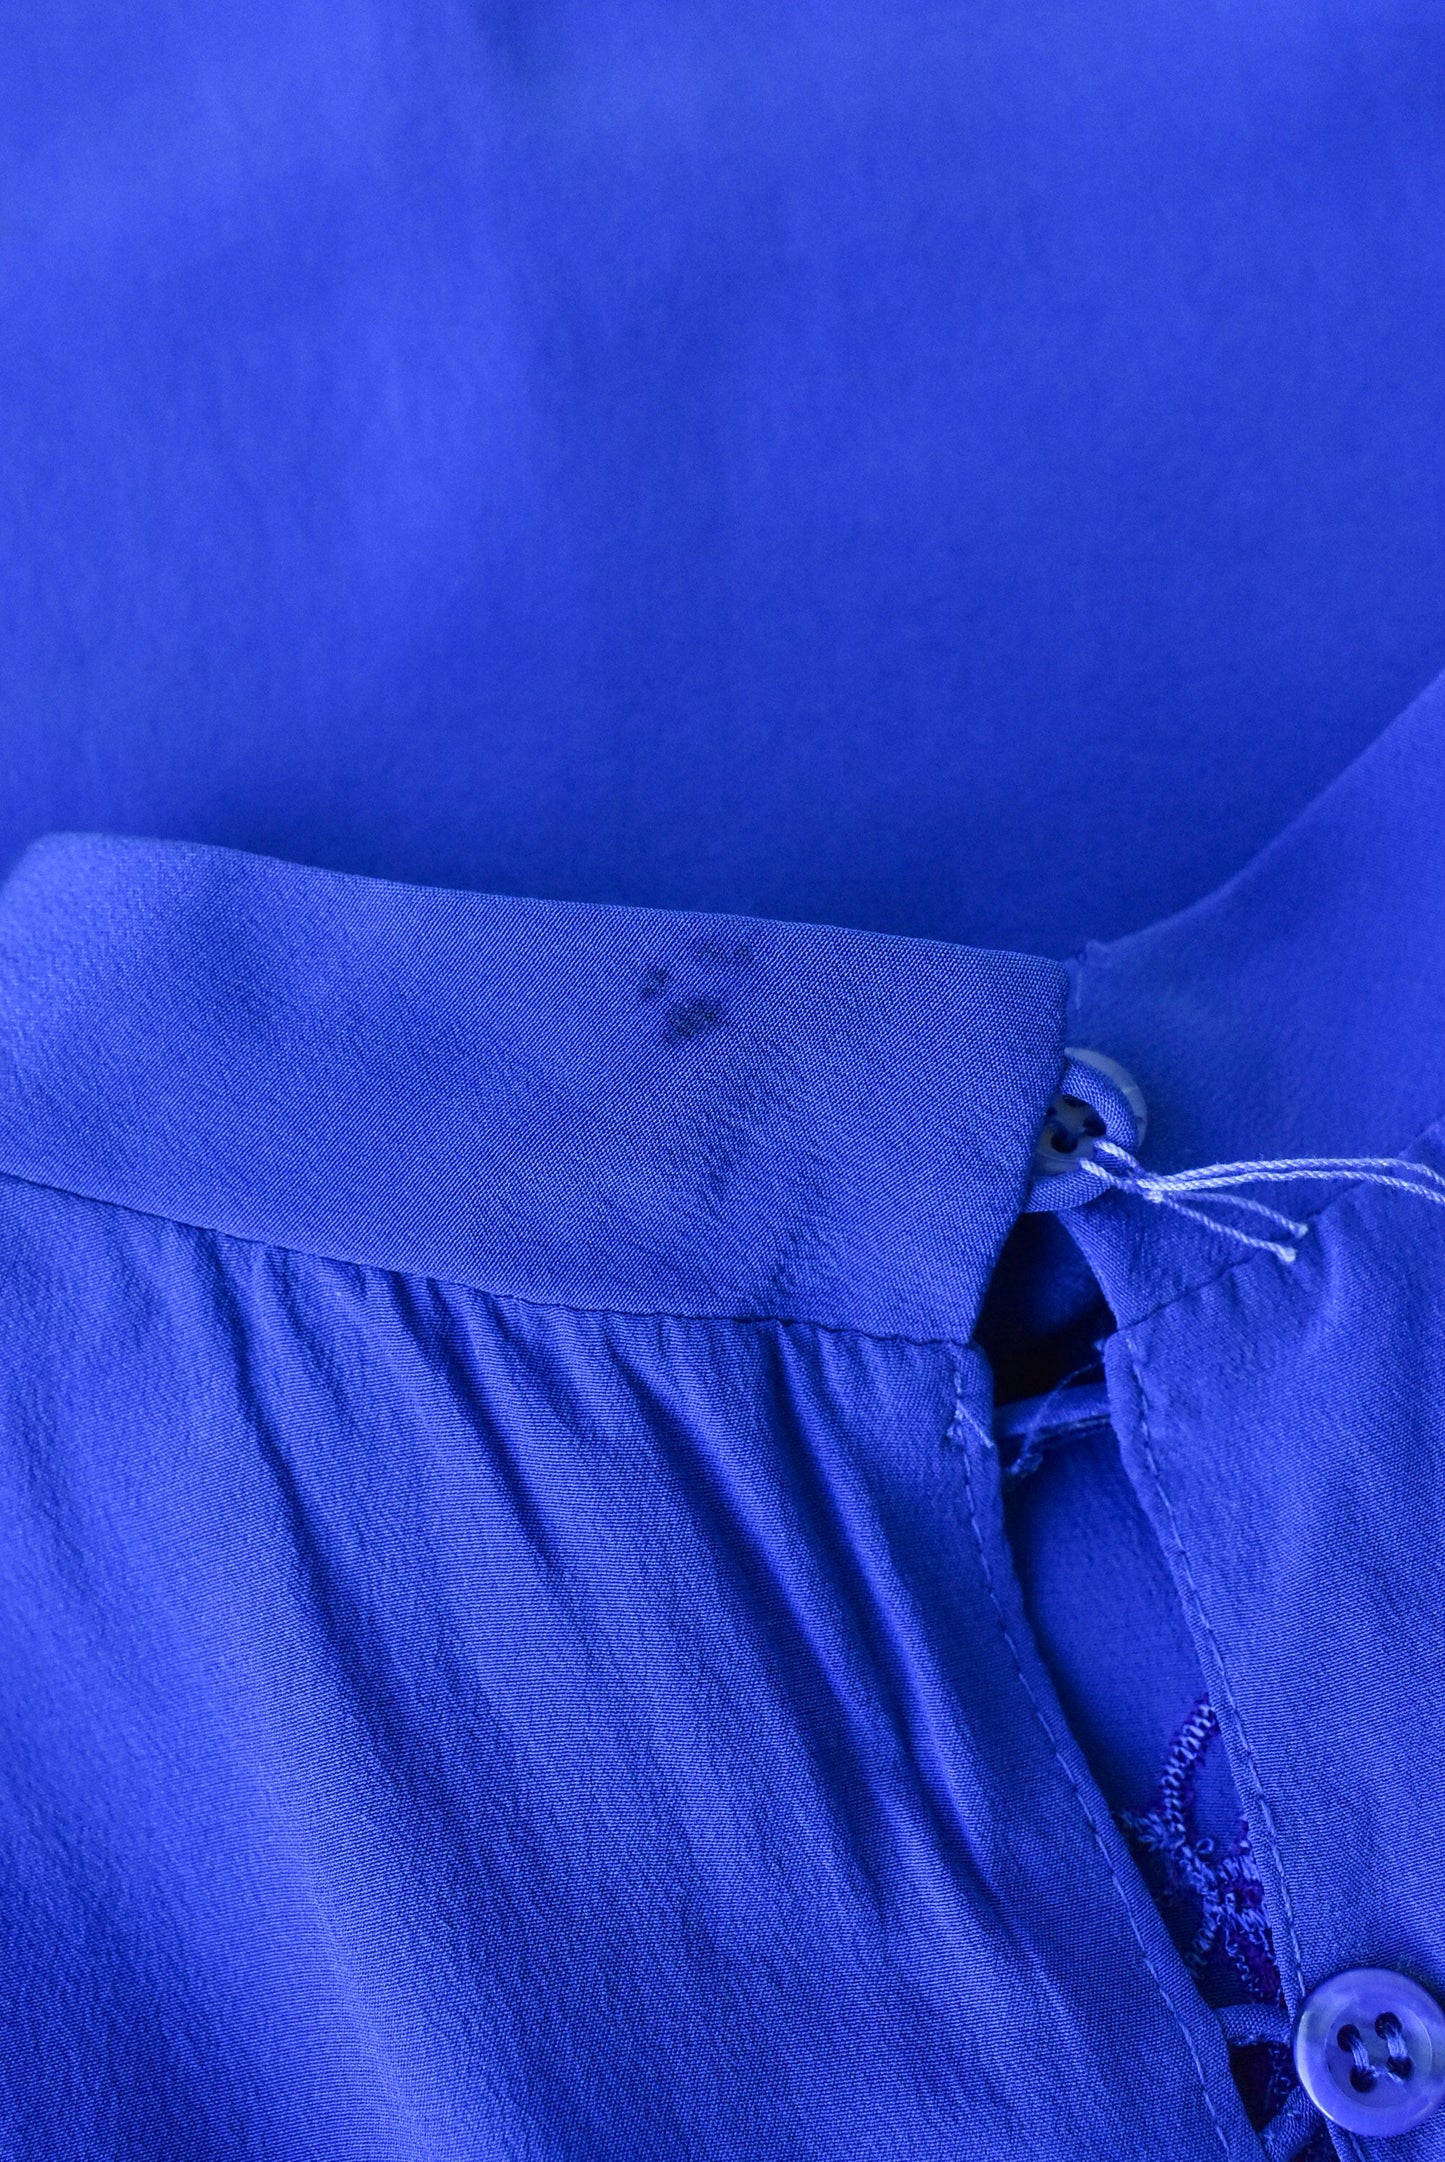 Highland Knitwear vintage 100% silk royal blue dress, size S